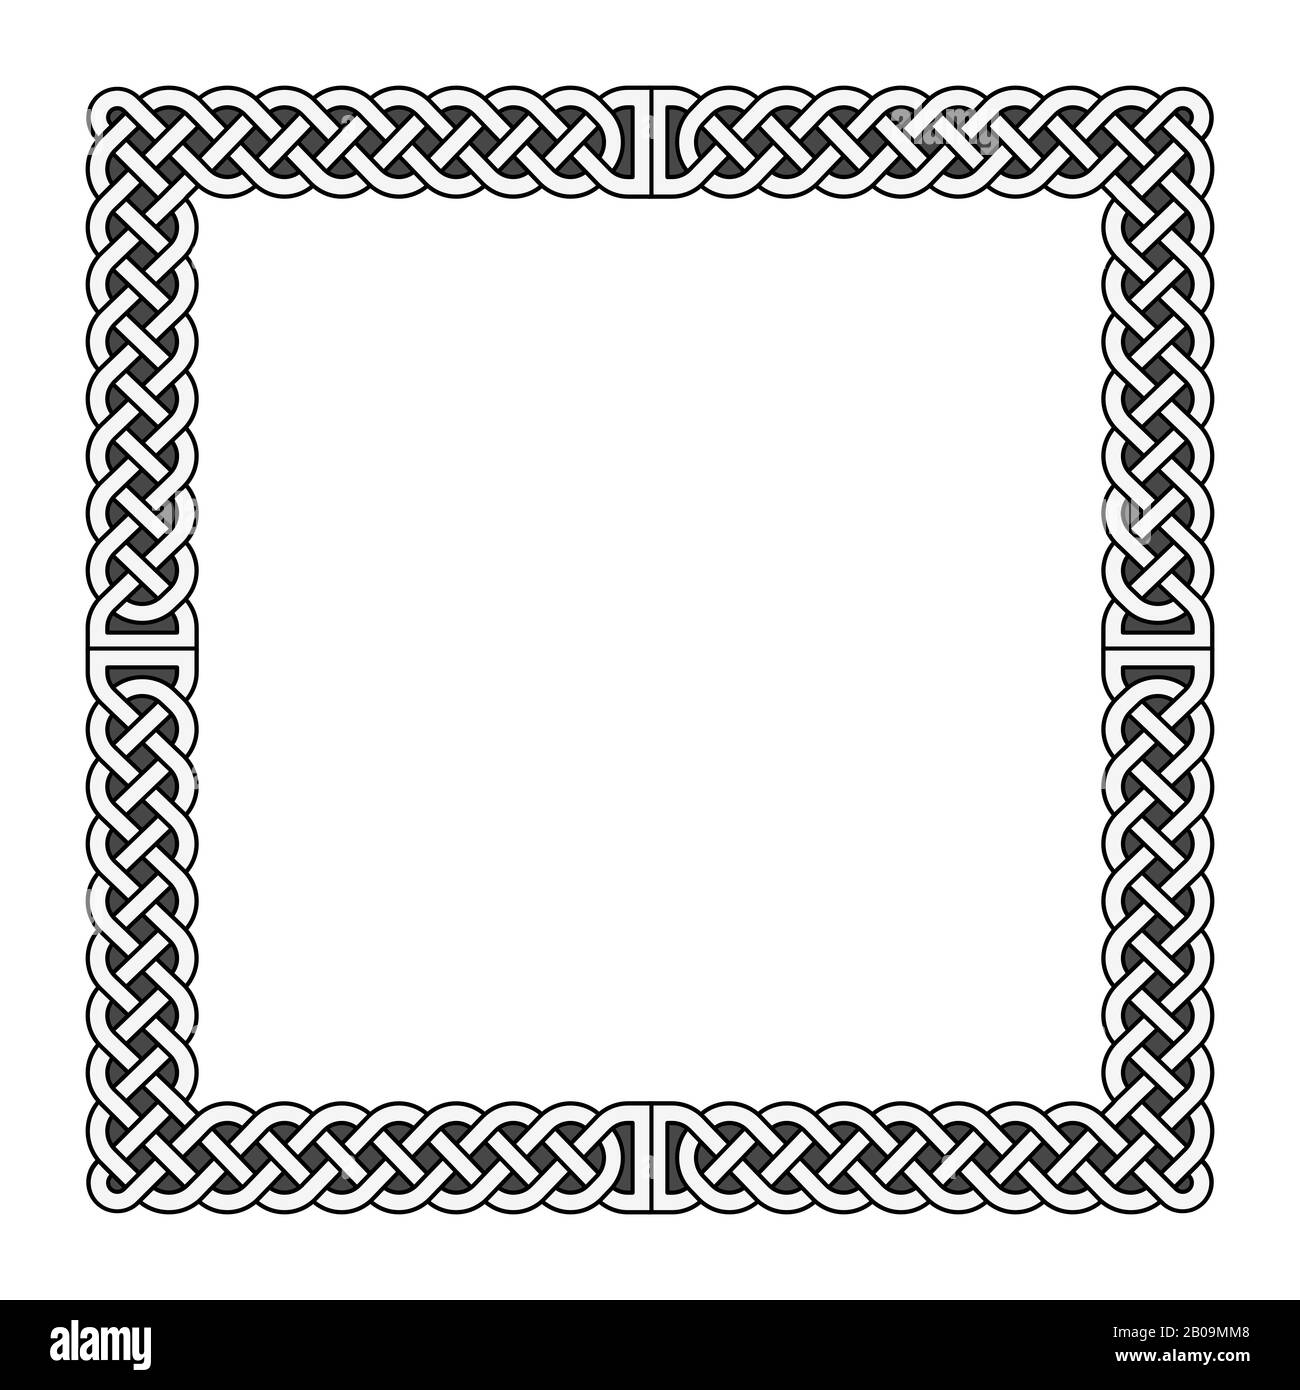 Celtic knots vector medieval frame in black and white. Decoration frame pattern illustration Stock Vector